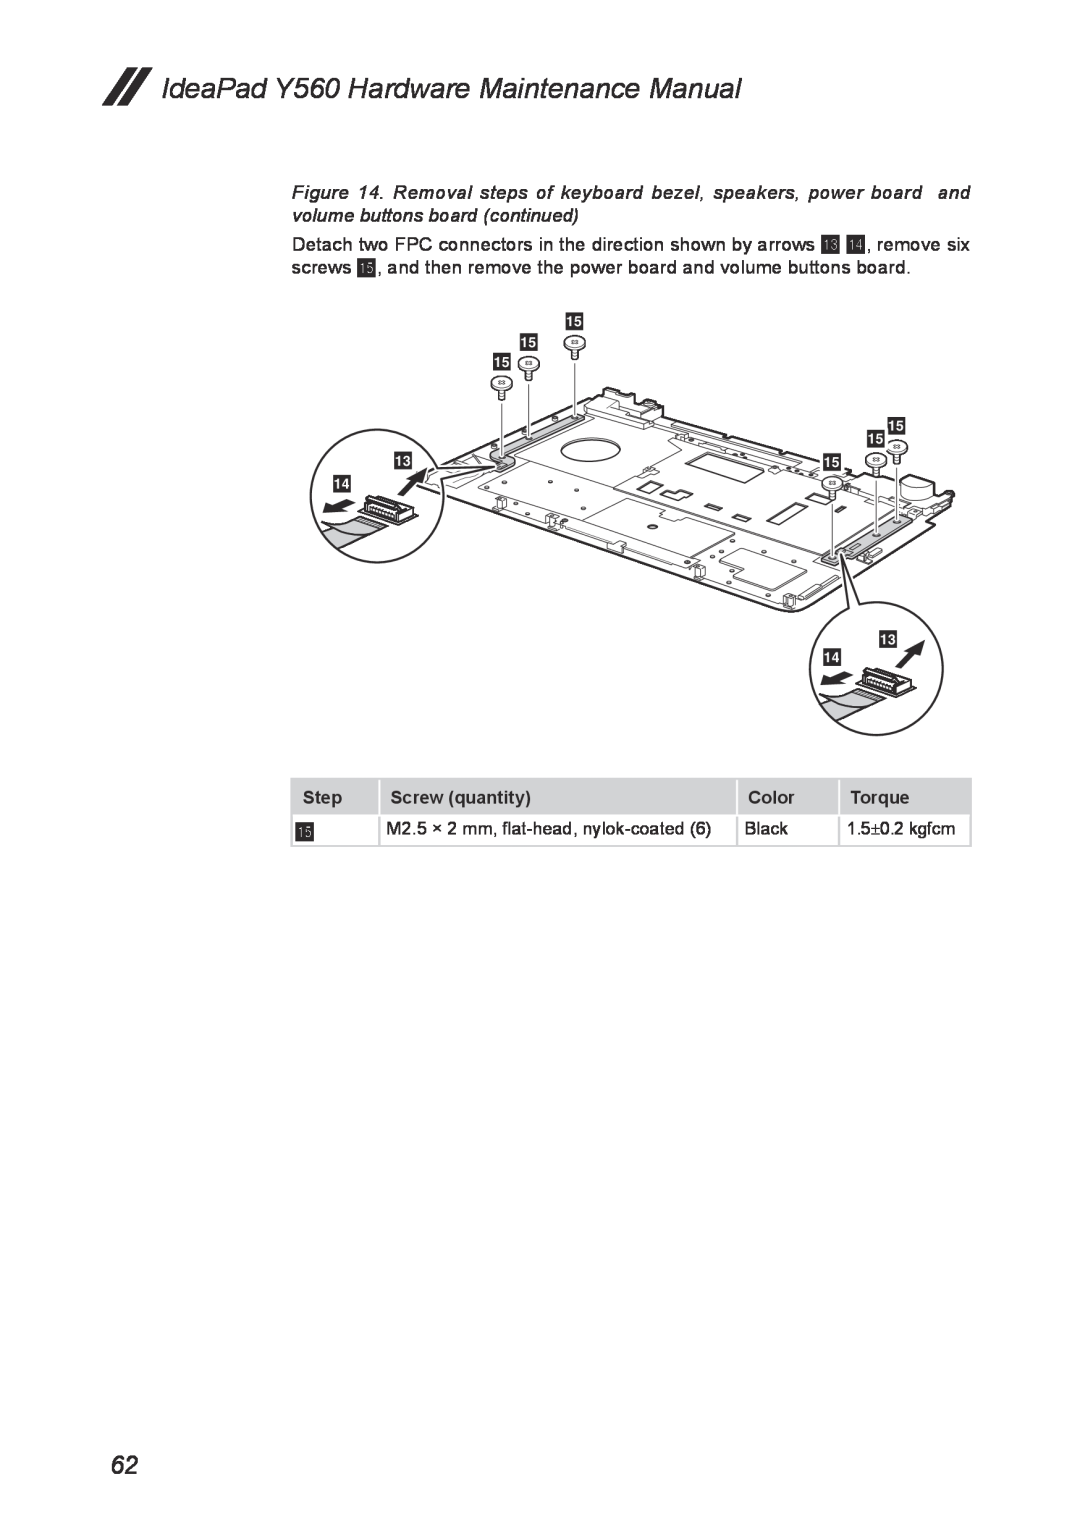 Lenovo manual IdeaPad Y560 Hardware Maintenance Manual, Step, Screw quantity, Color, Torque 